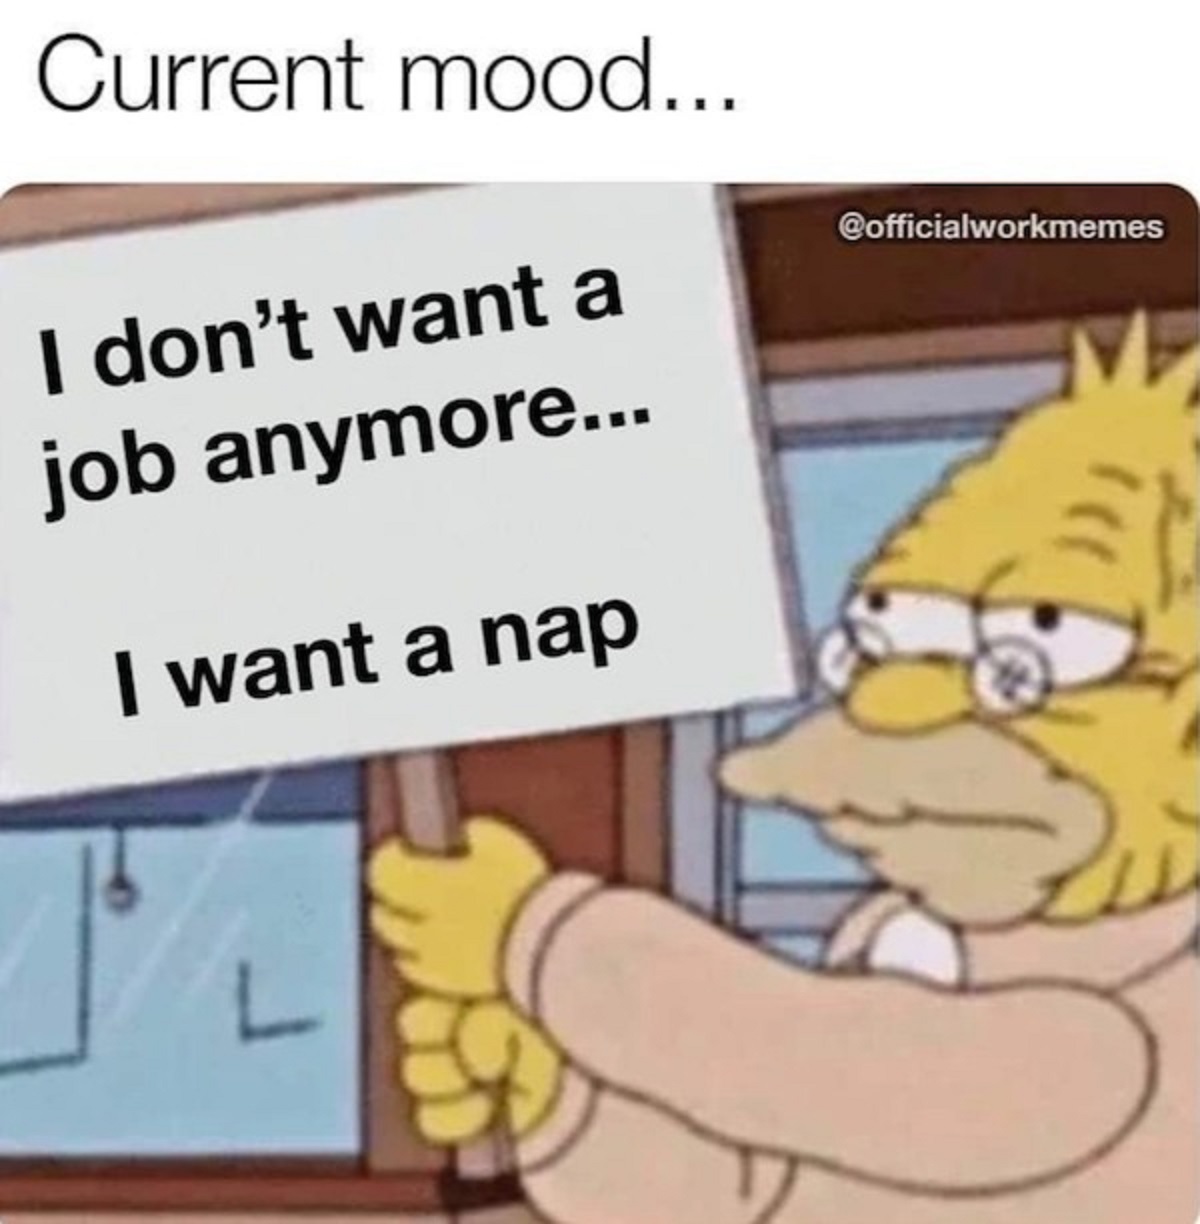 grandpa simpson sign meme - Current mood... I don't want a job anymore... I want a nap A